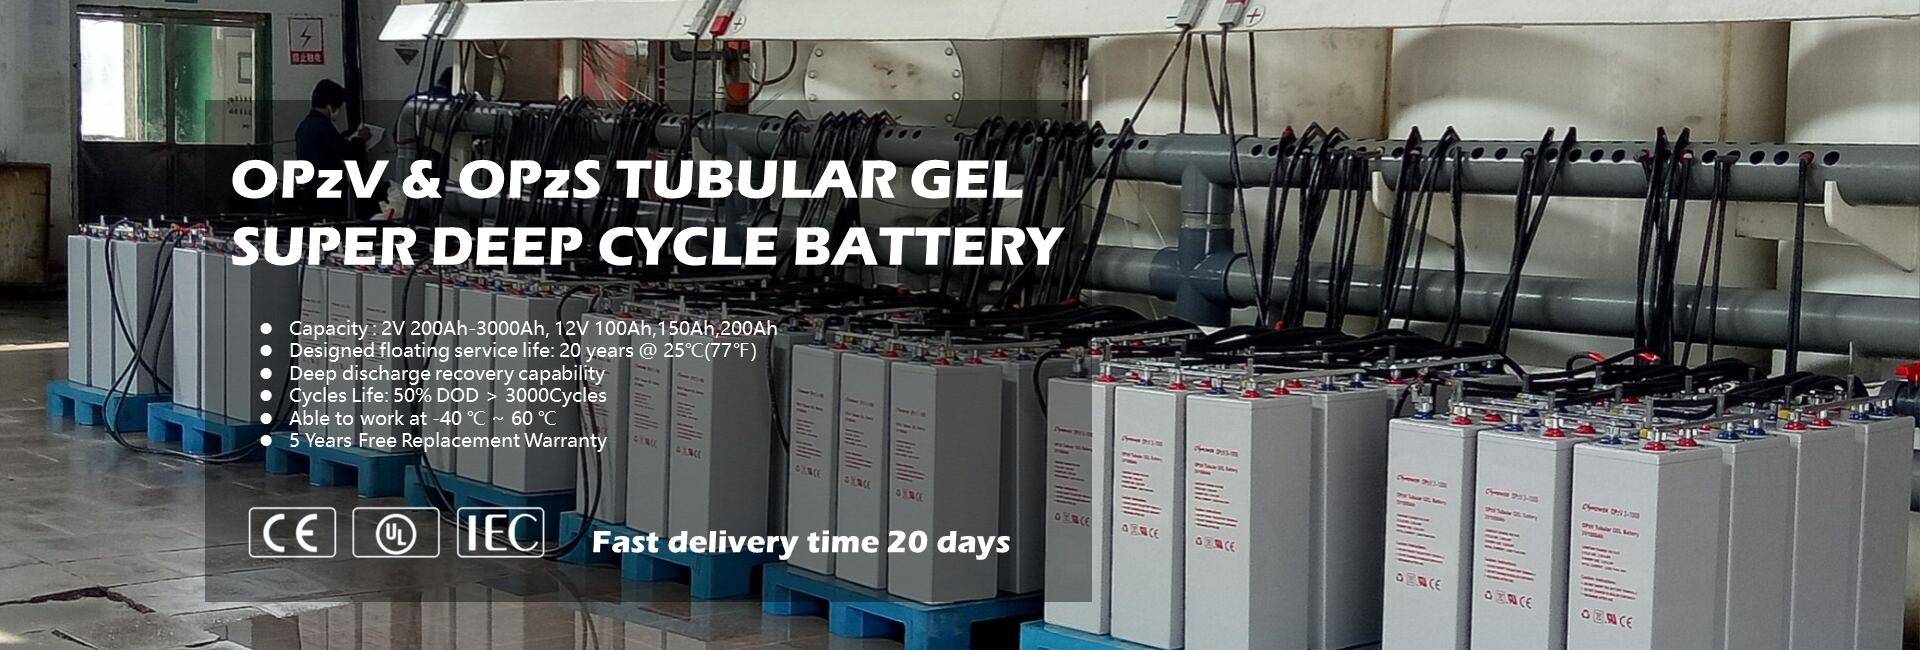 Super tebileng cycle Tubular OPZV OPZS Battery